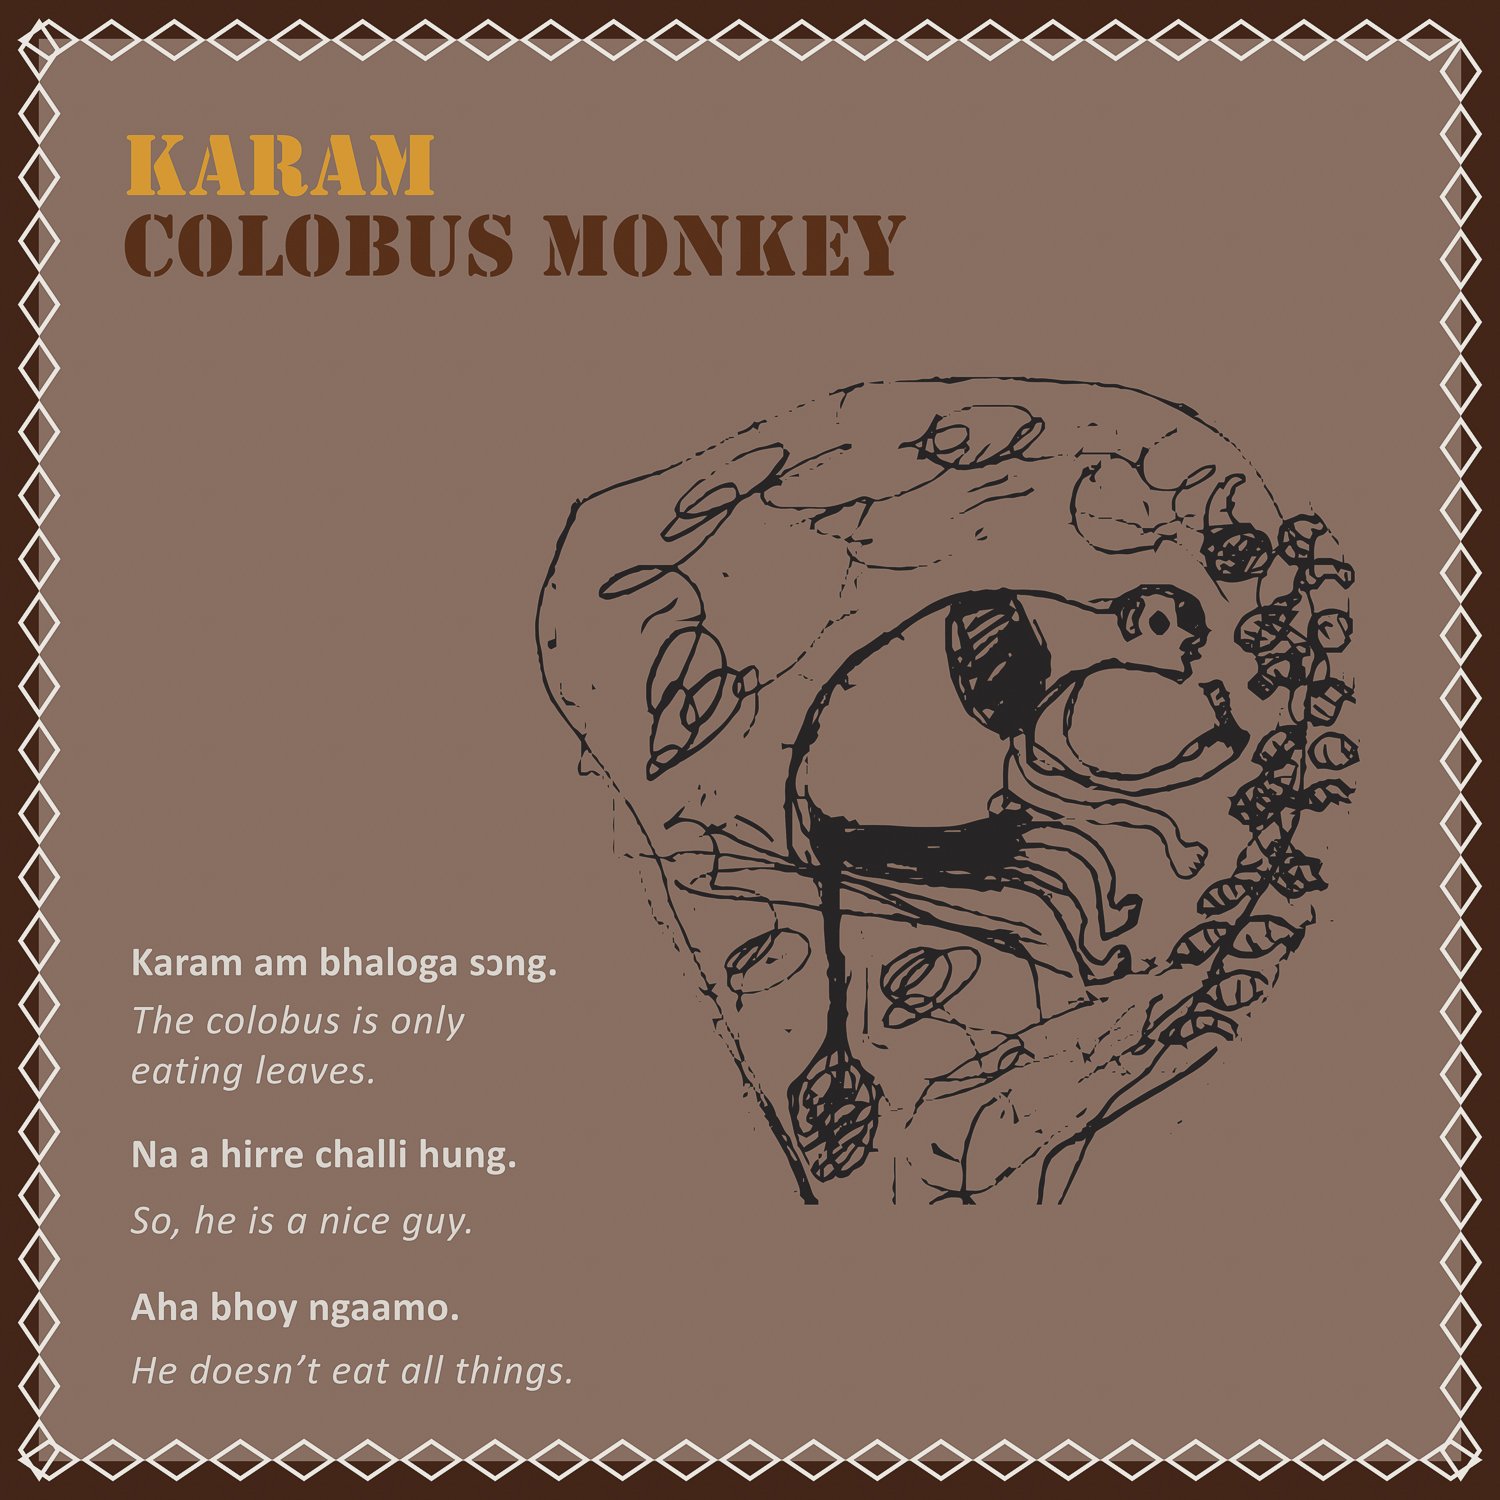 karam = colobus monkey